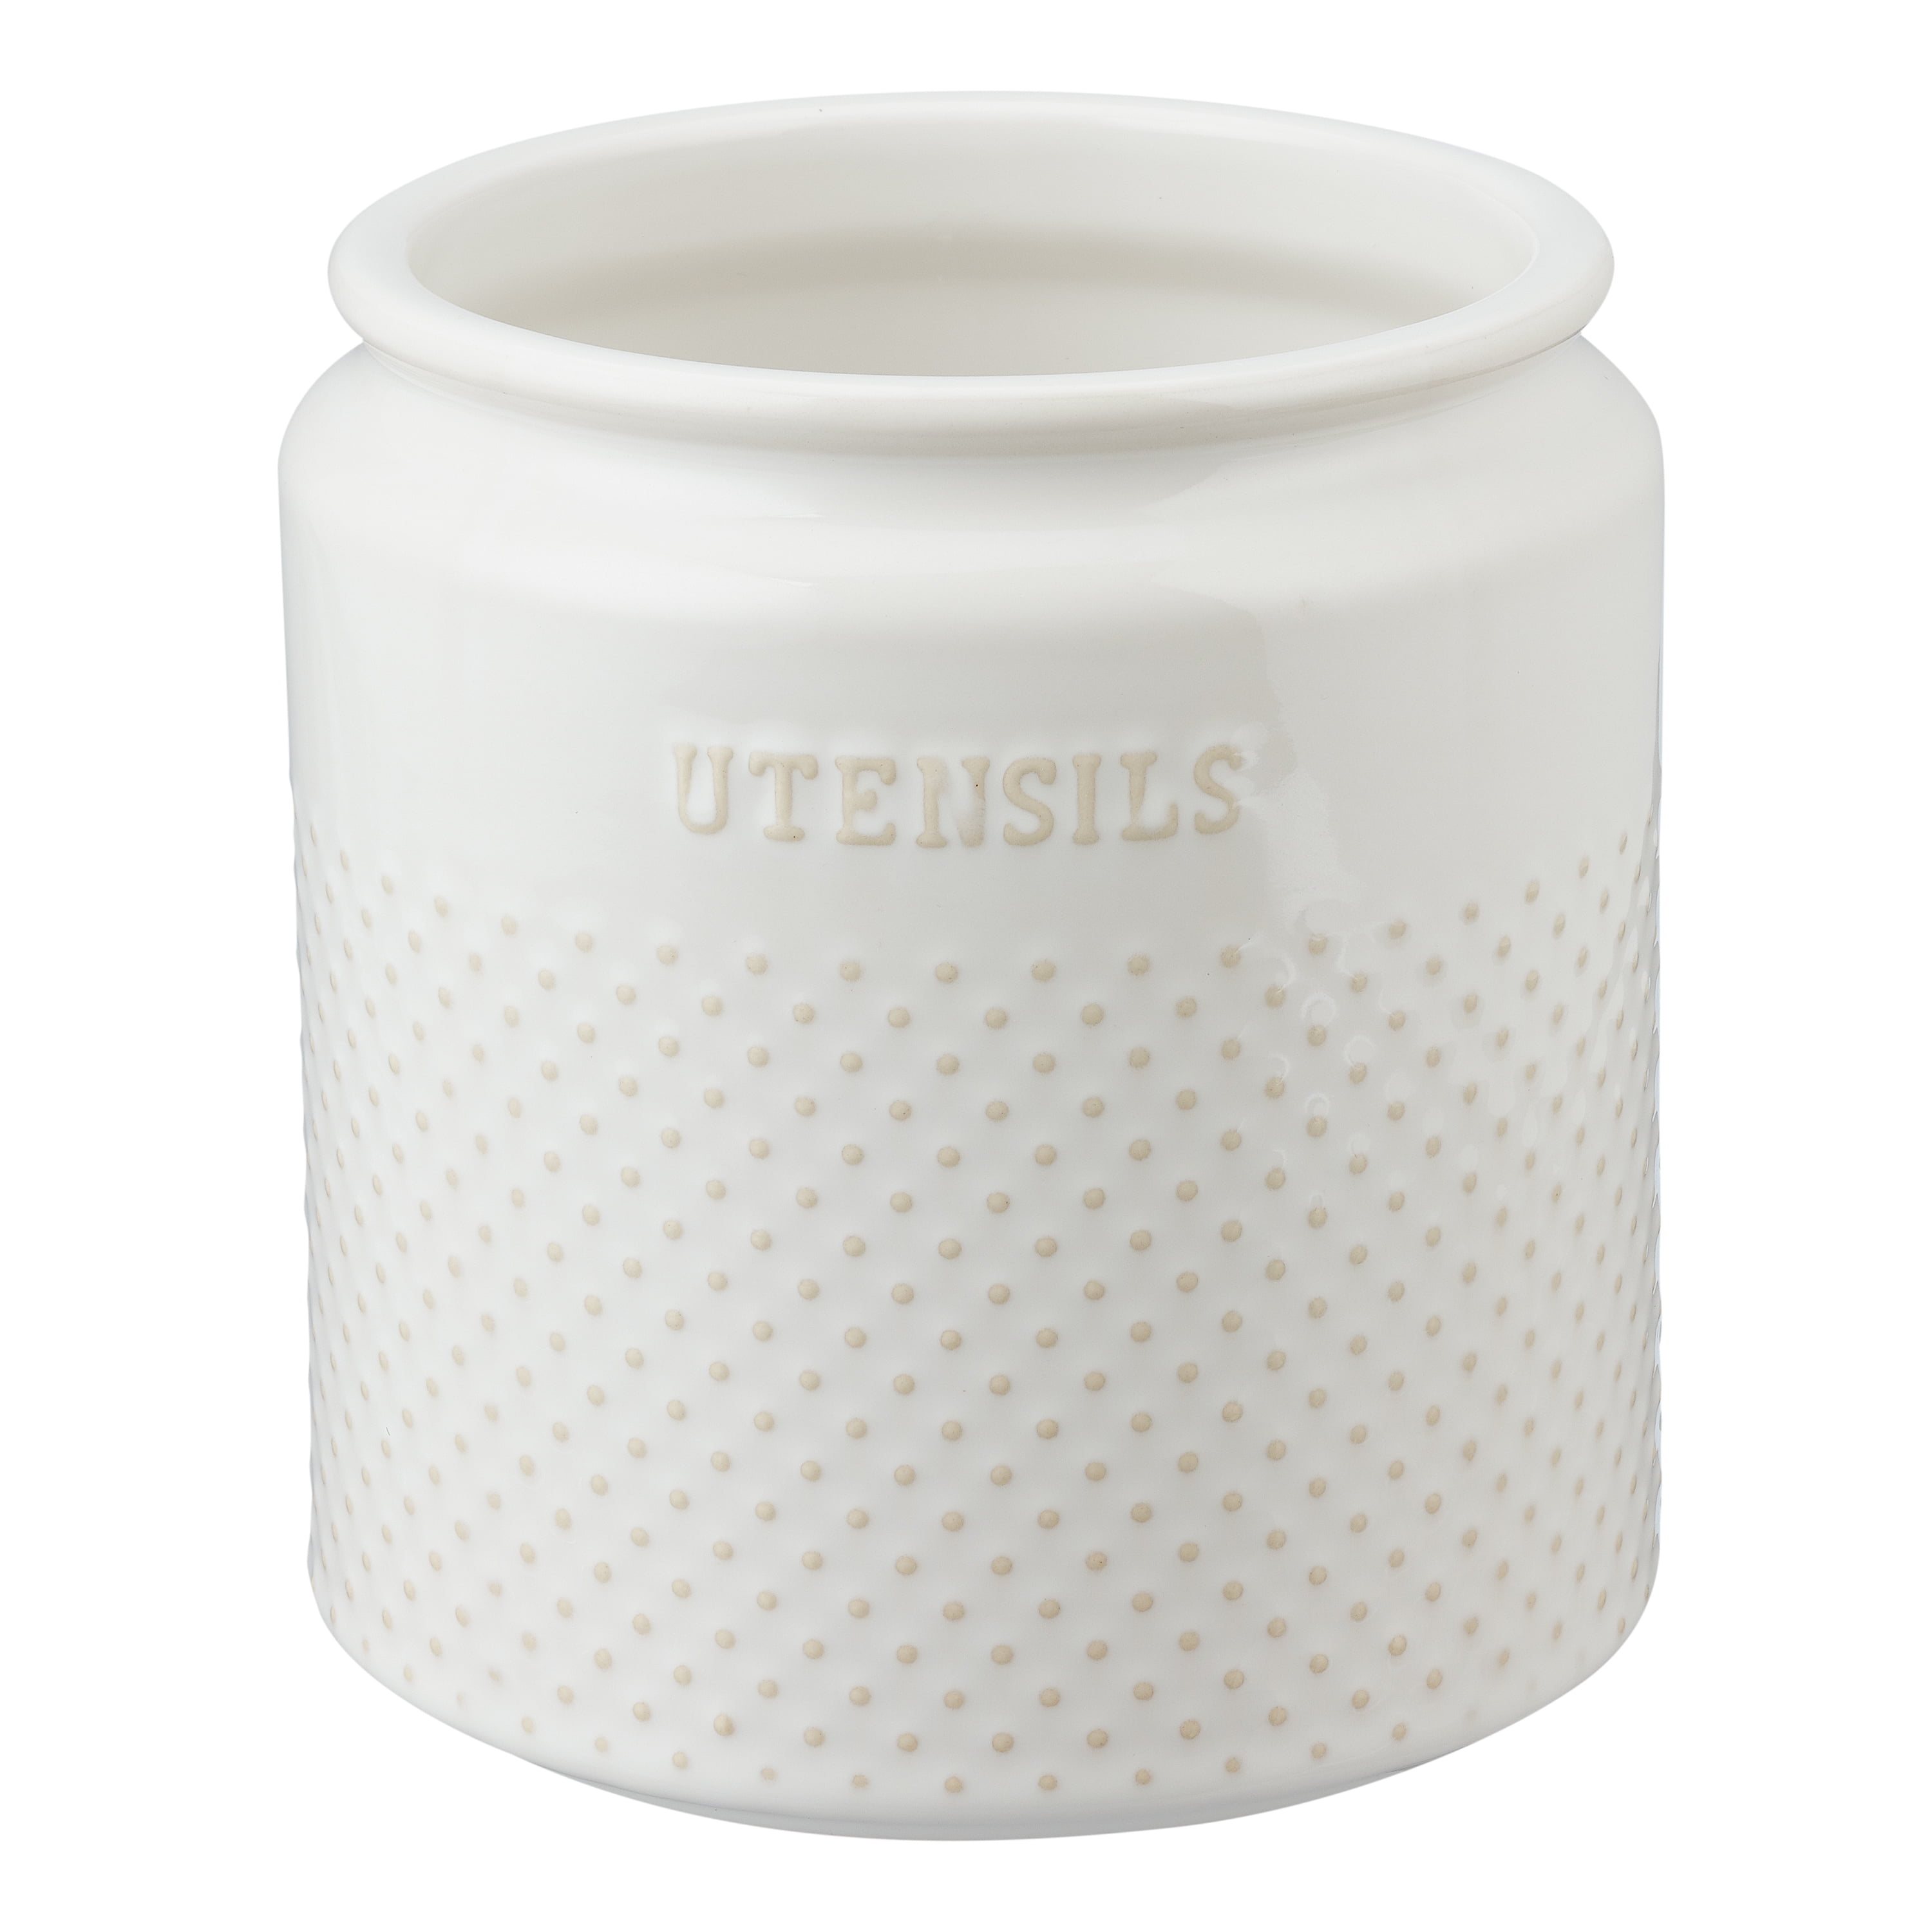 Dotted White Ceramic Kitchen Utensil Holder with Utensils